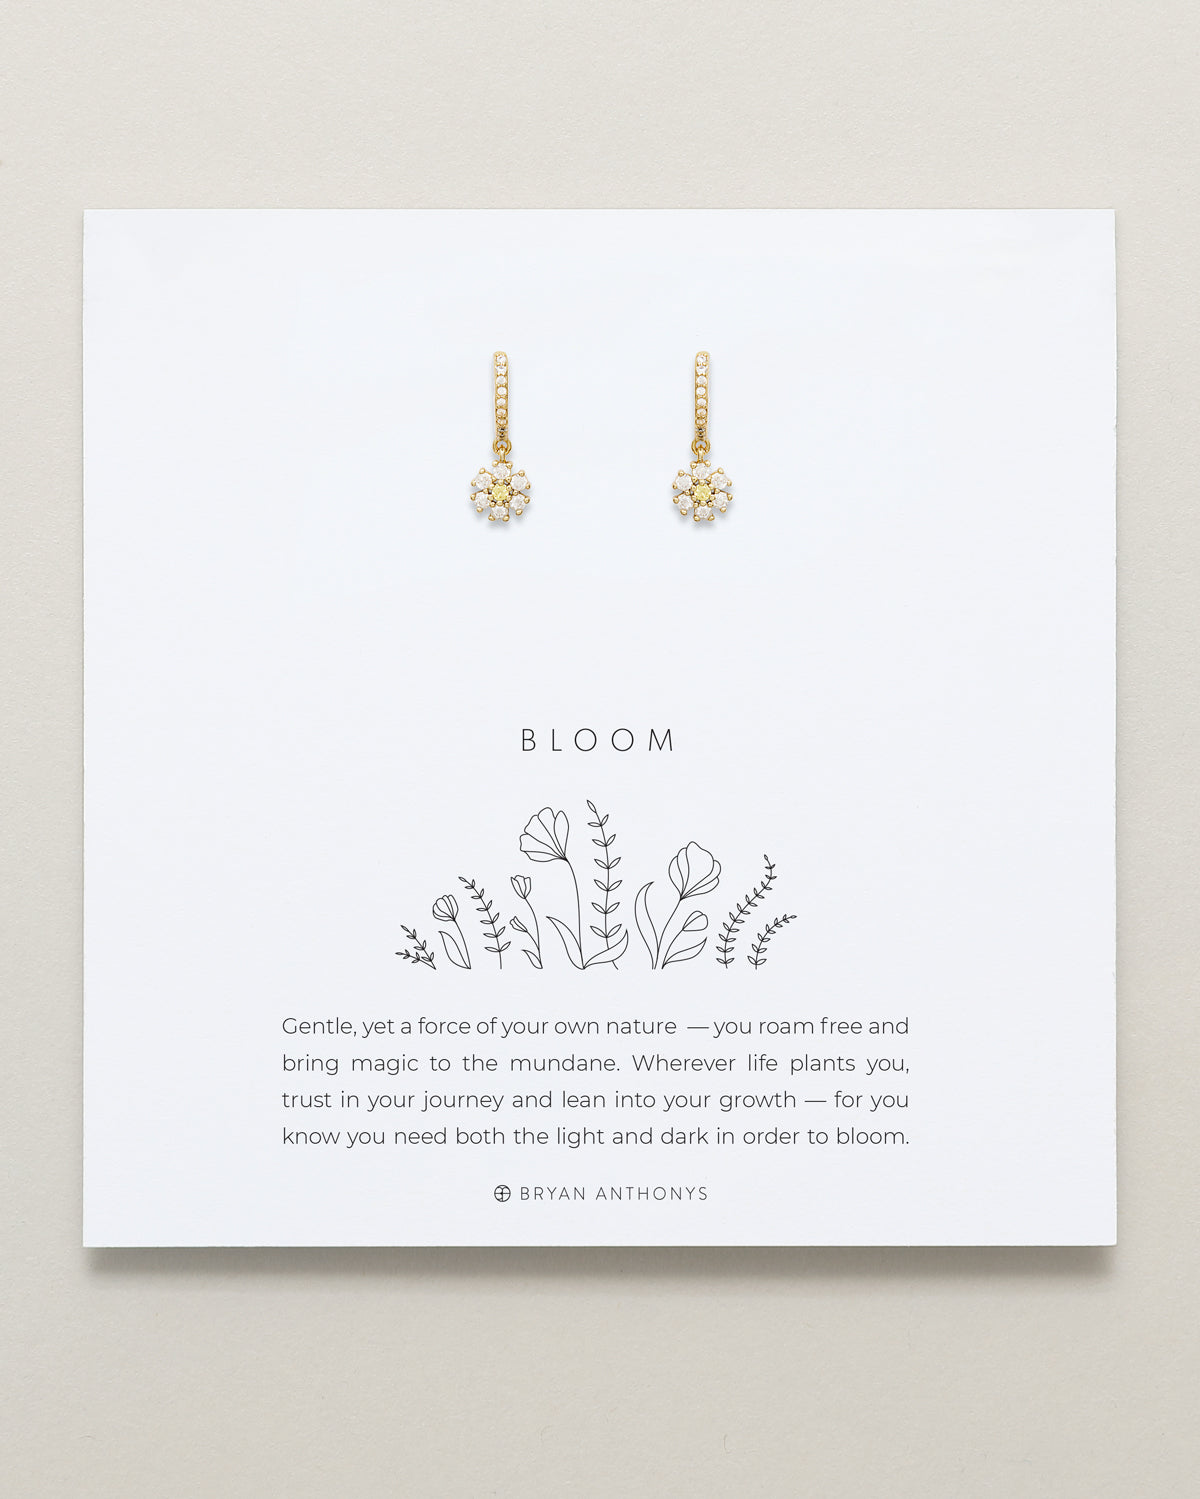 Bryan Anthonys Bloom Gold Huggie Earrings On Card